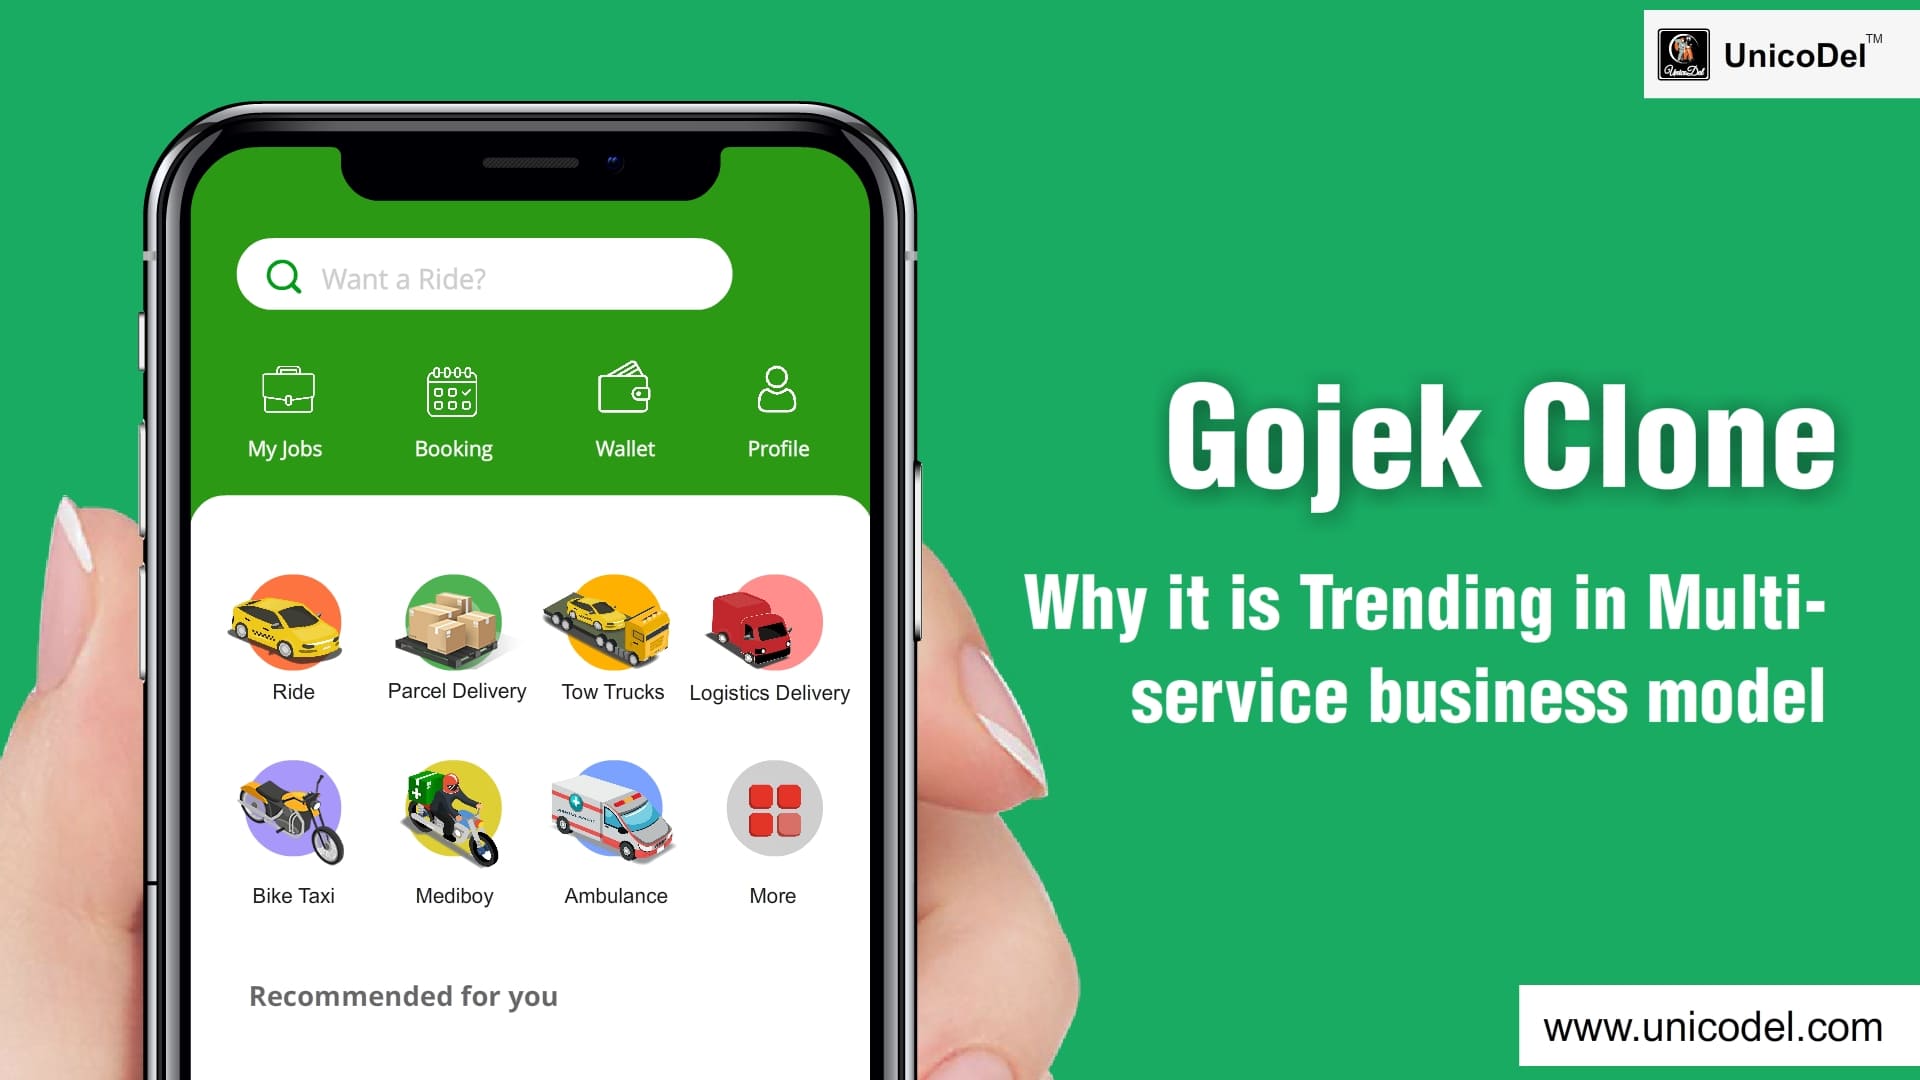 Gojek Clone - Trending in Multi-Service Business Model